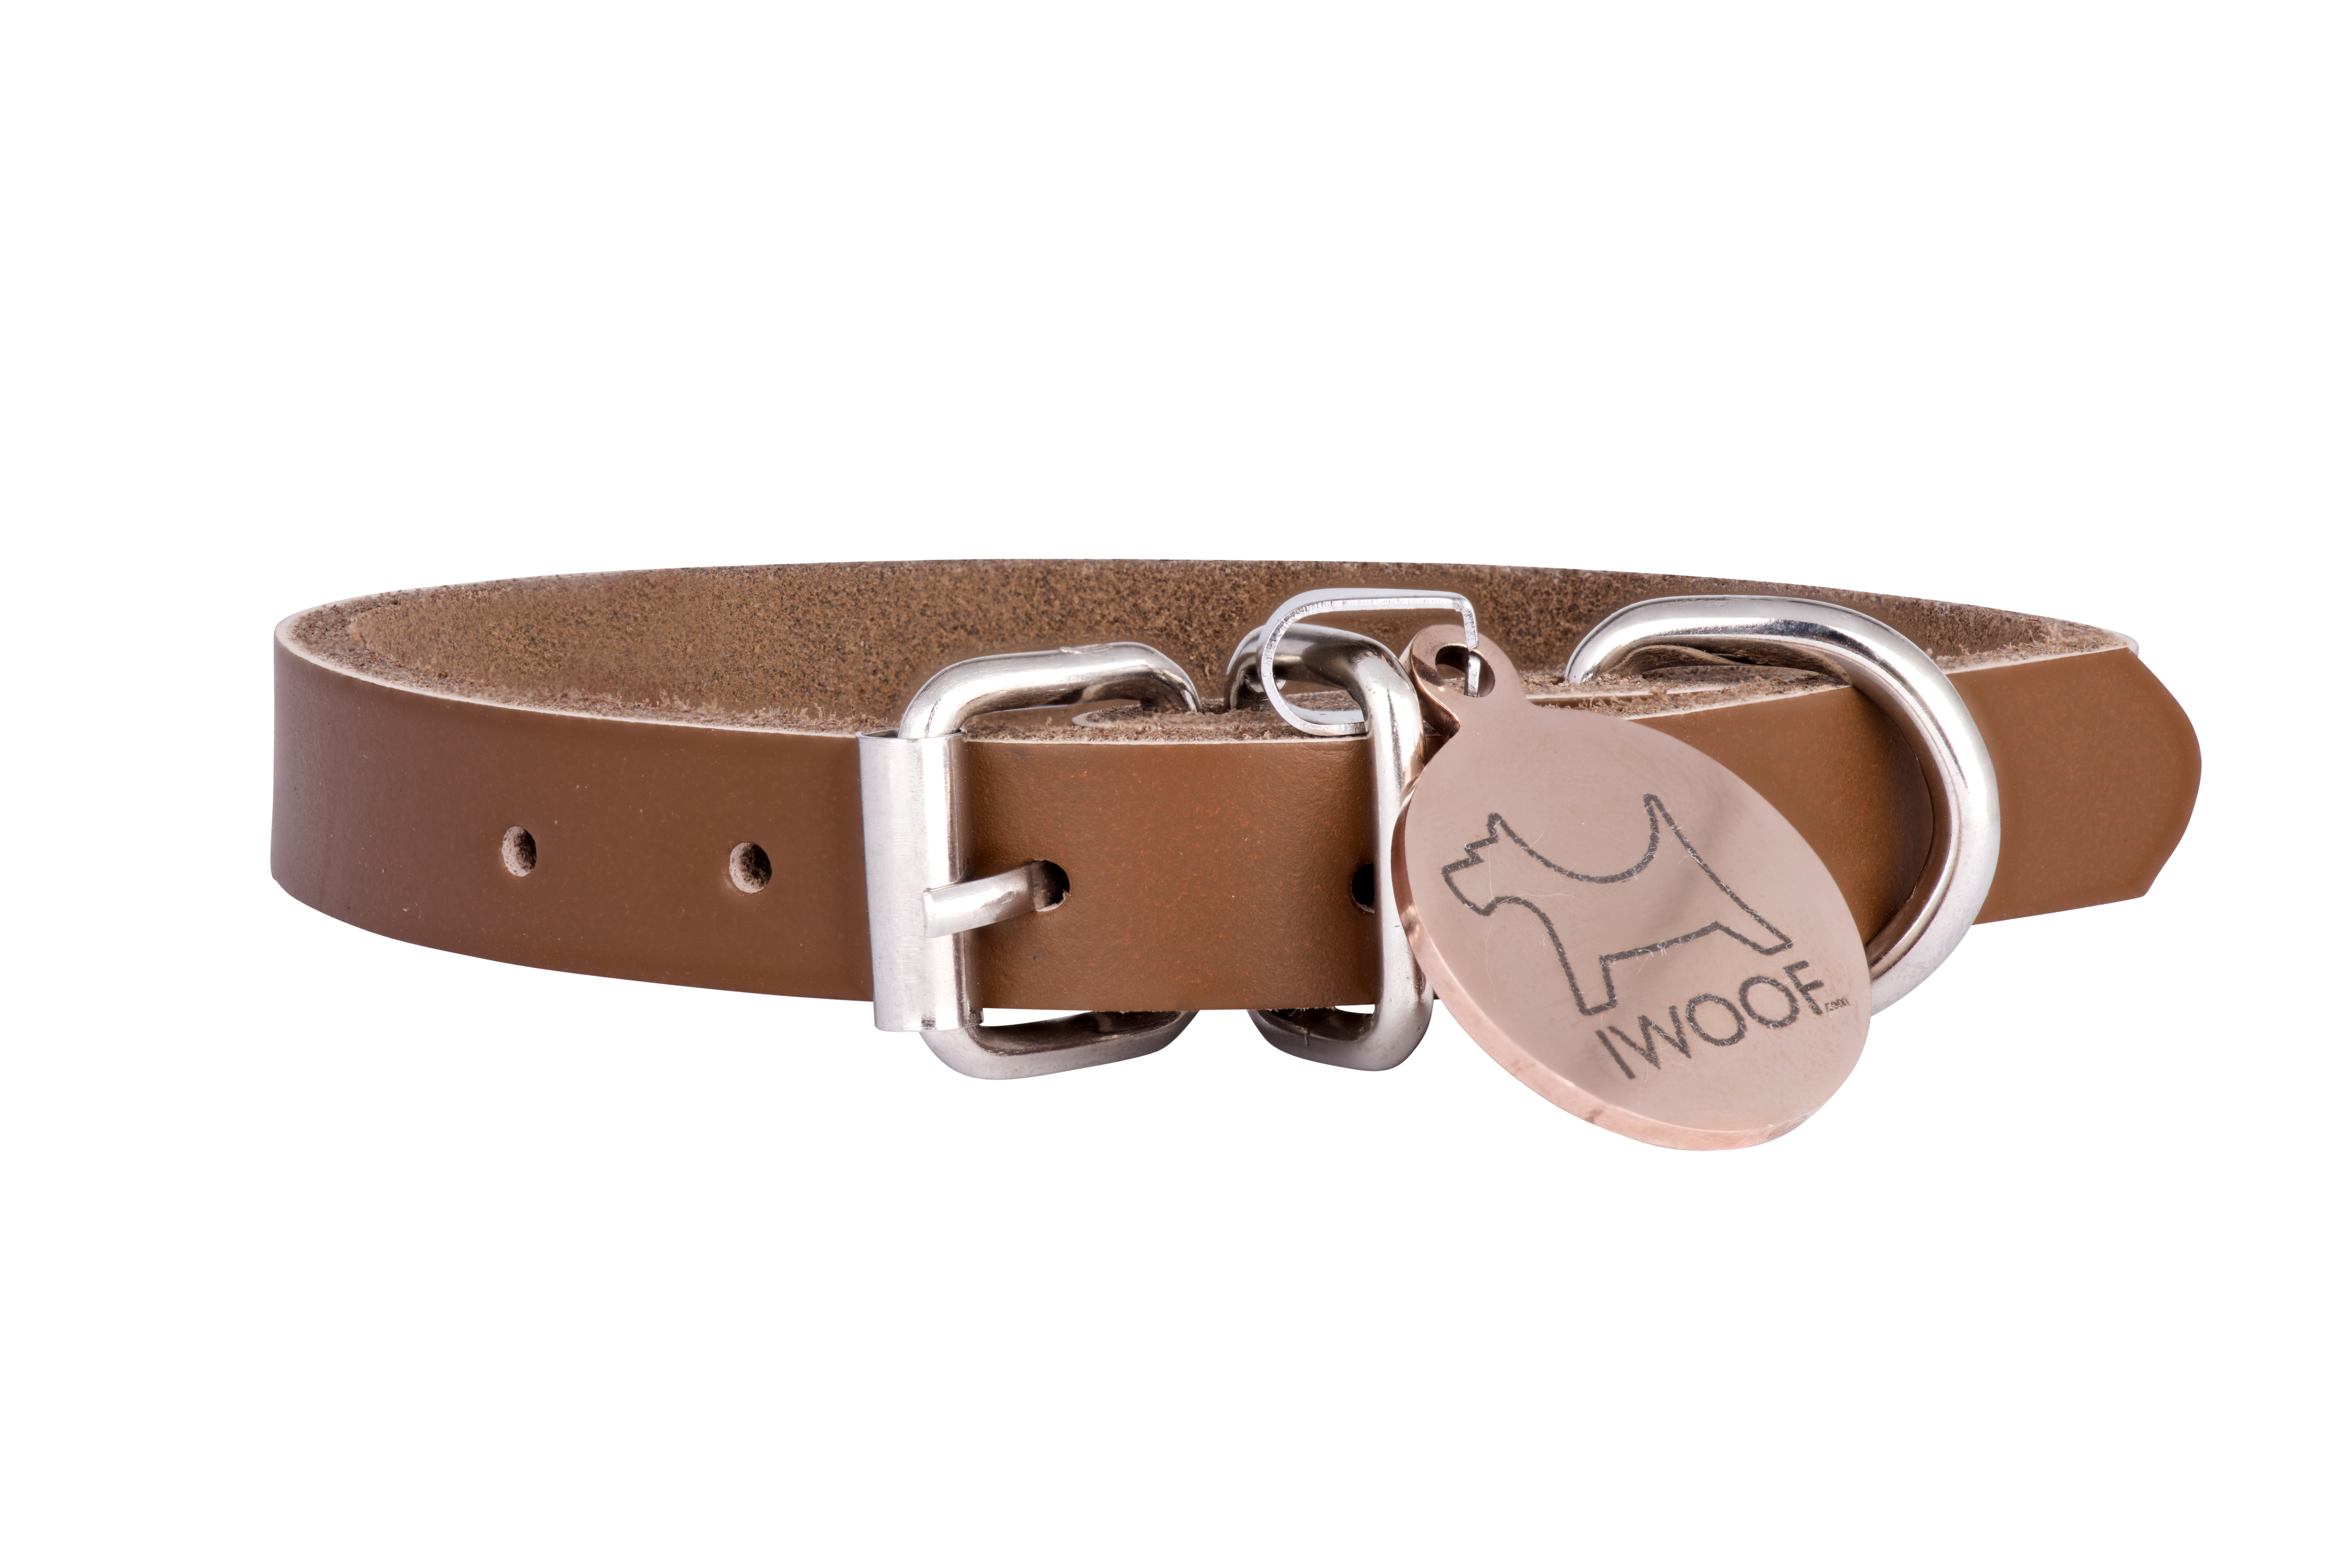 Morwenna designer dog collar and matching designer dog lead in tan by IWOOF